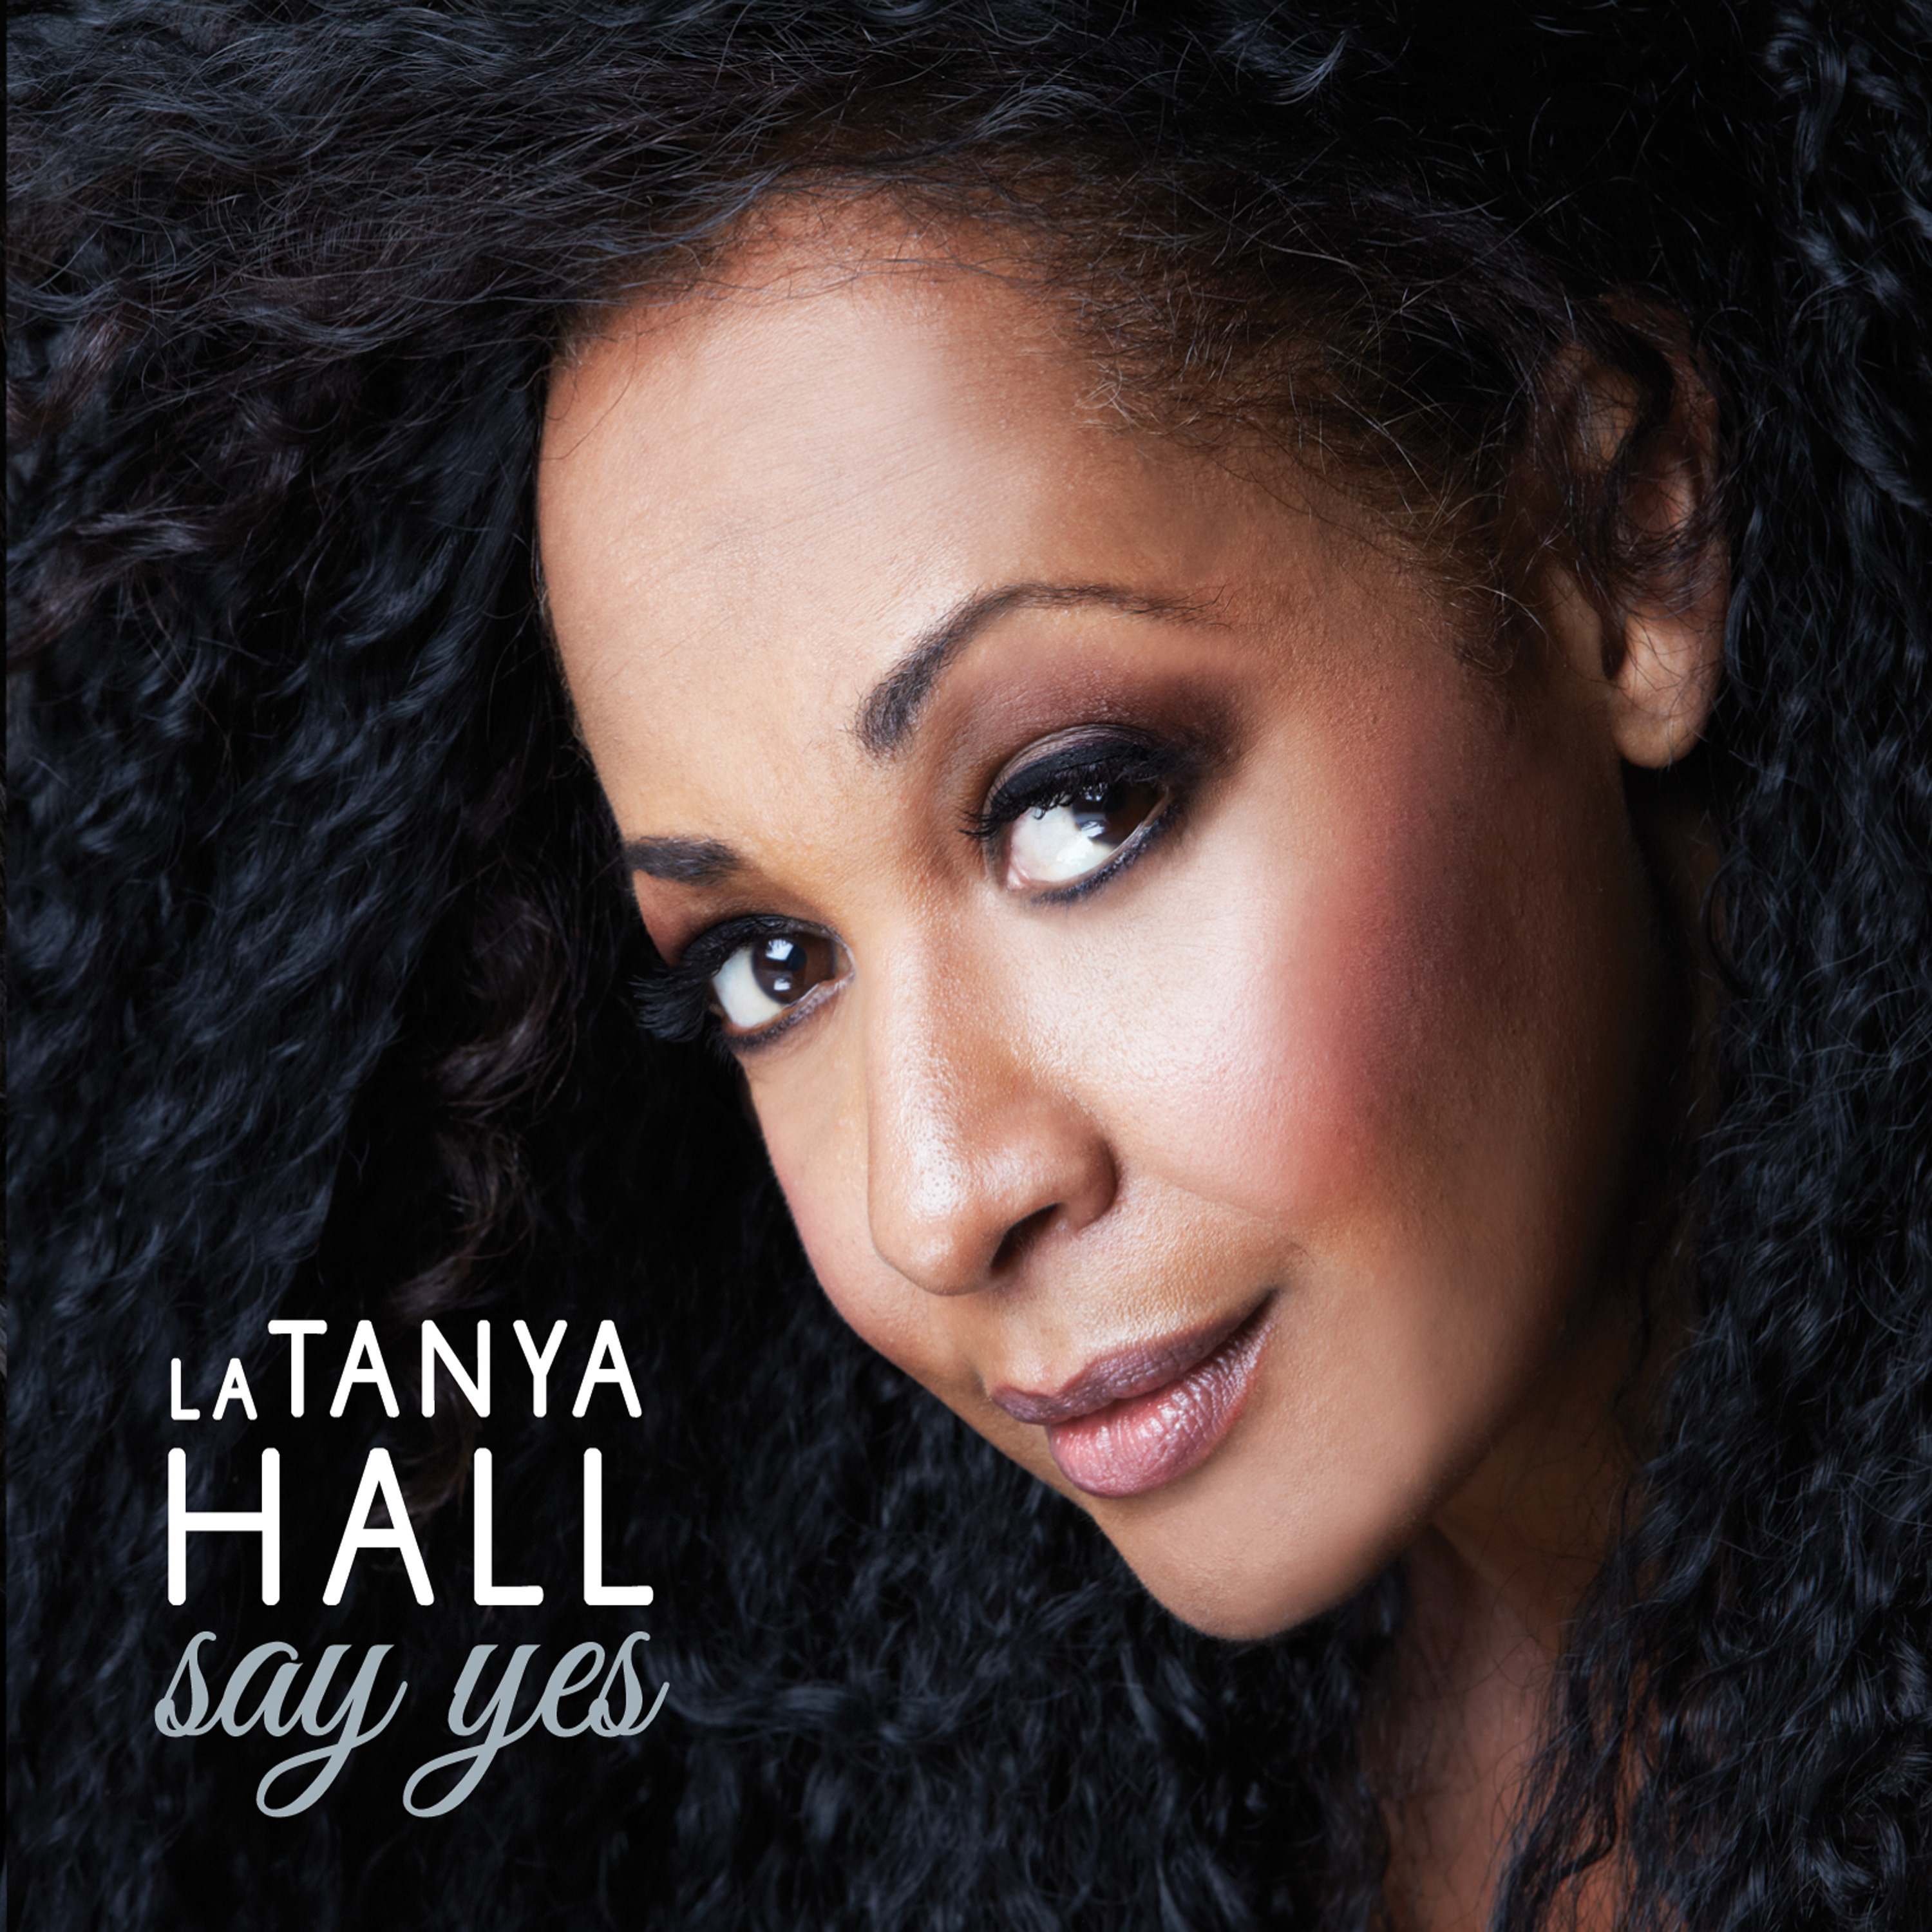 La Tanya Hall SAY YES CD cover